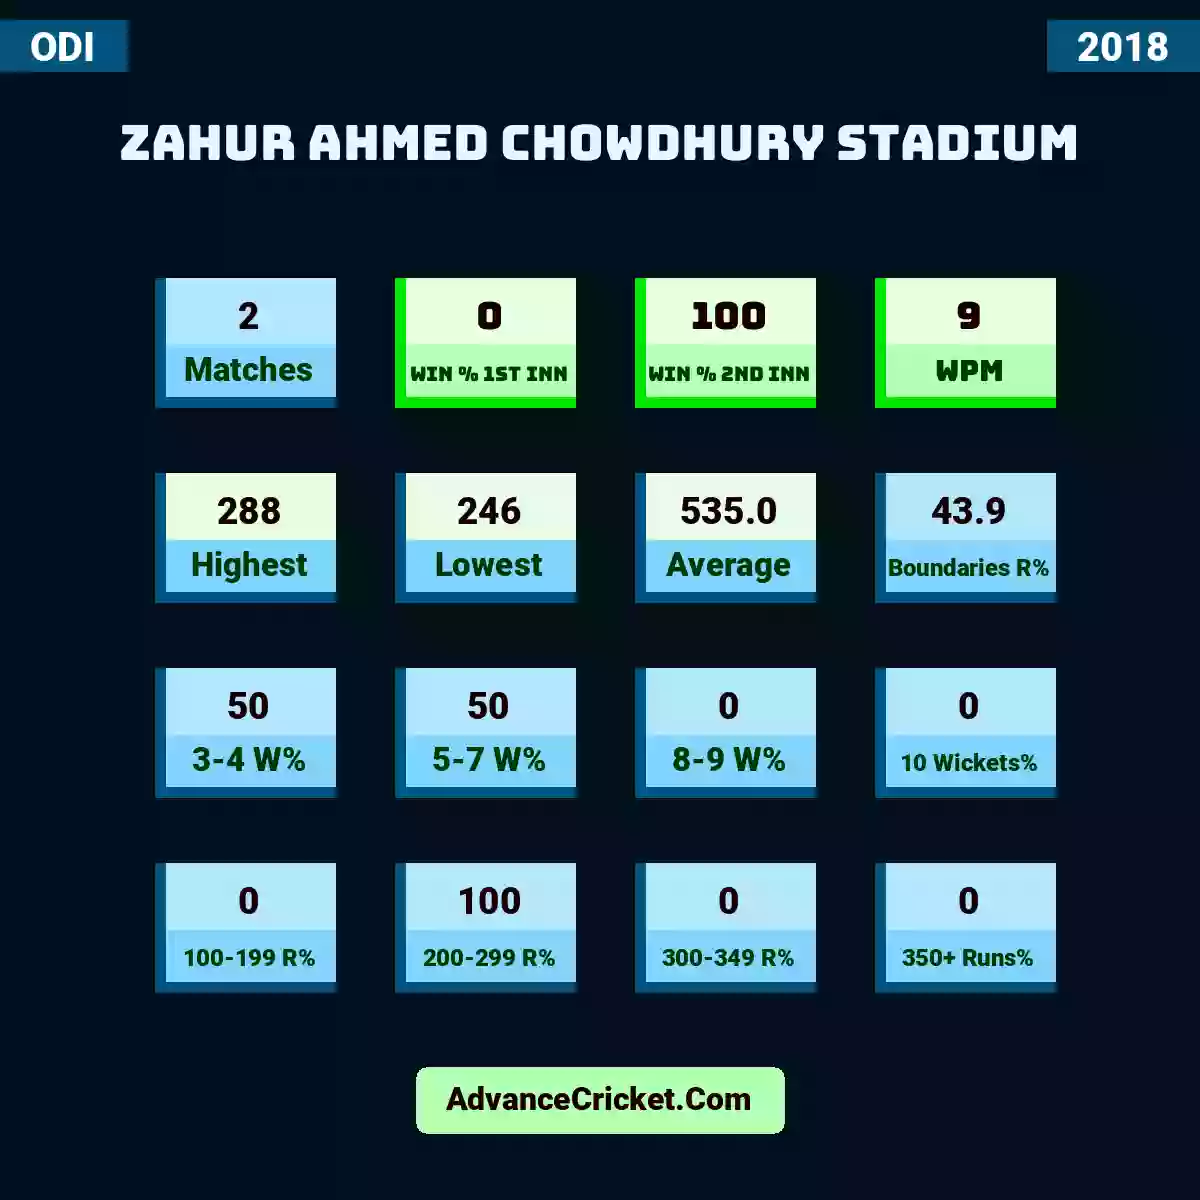 Image showing Zahur Ahmed Chowdhury Stadium with Matches: 2, Win % 1st Inn: 0, Win % 2nd Inn: 100, WPM: 9, Highest: 288, Lowest: 246, Average: 535.0, Boundaries R%: 43.9, 3-4 W%: 50, 5-7 W%: 50, 8-9 W%: 0, 10 Wickets%: 0, 100-199 R%: 0, 200-299 R%: 100, 300-349 R%: 0, 350+ Runs%: 0.